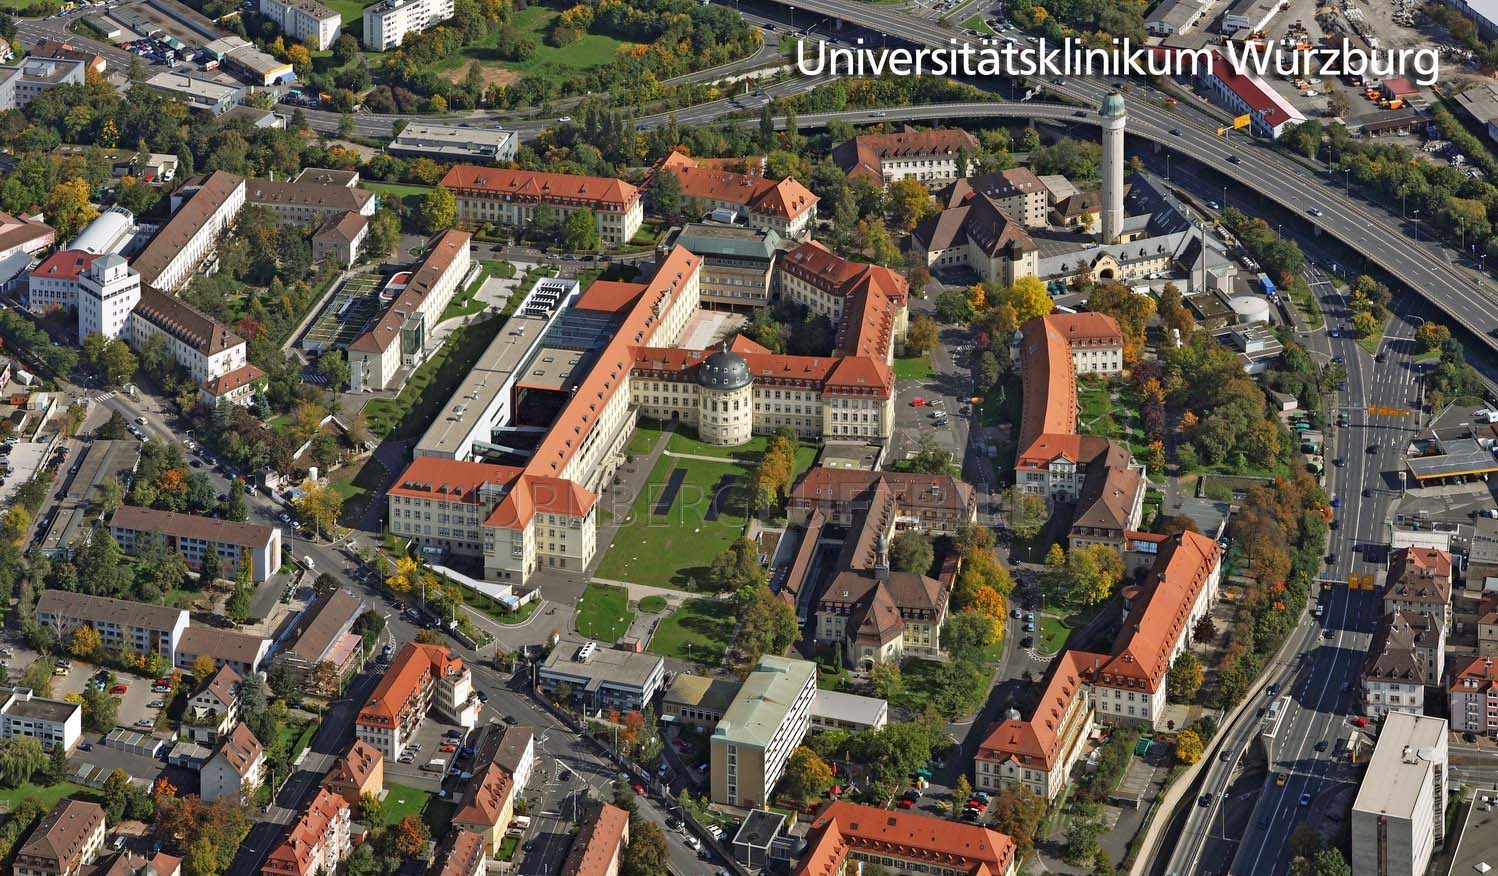 Aerial shot of Universitaetsklinikum Wuerzburg